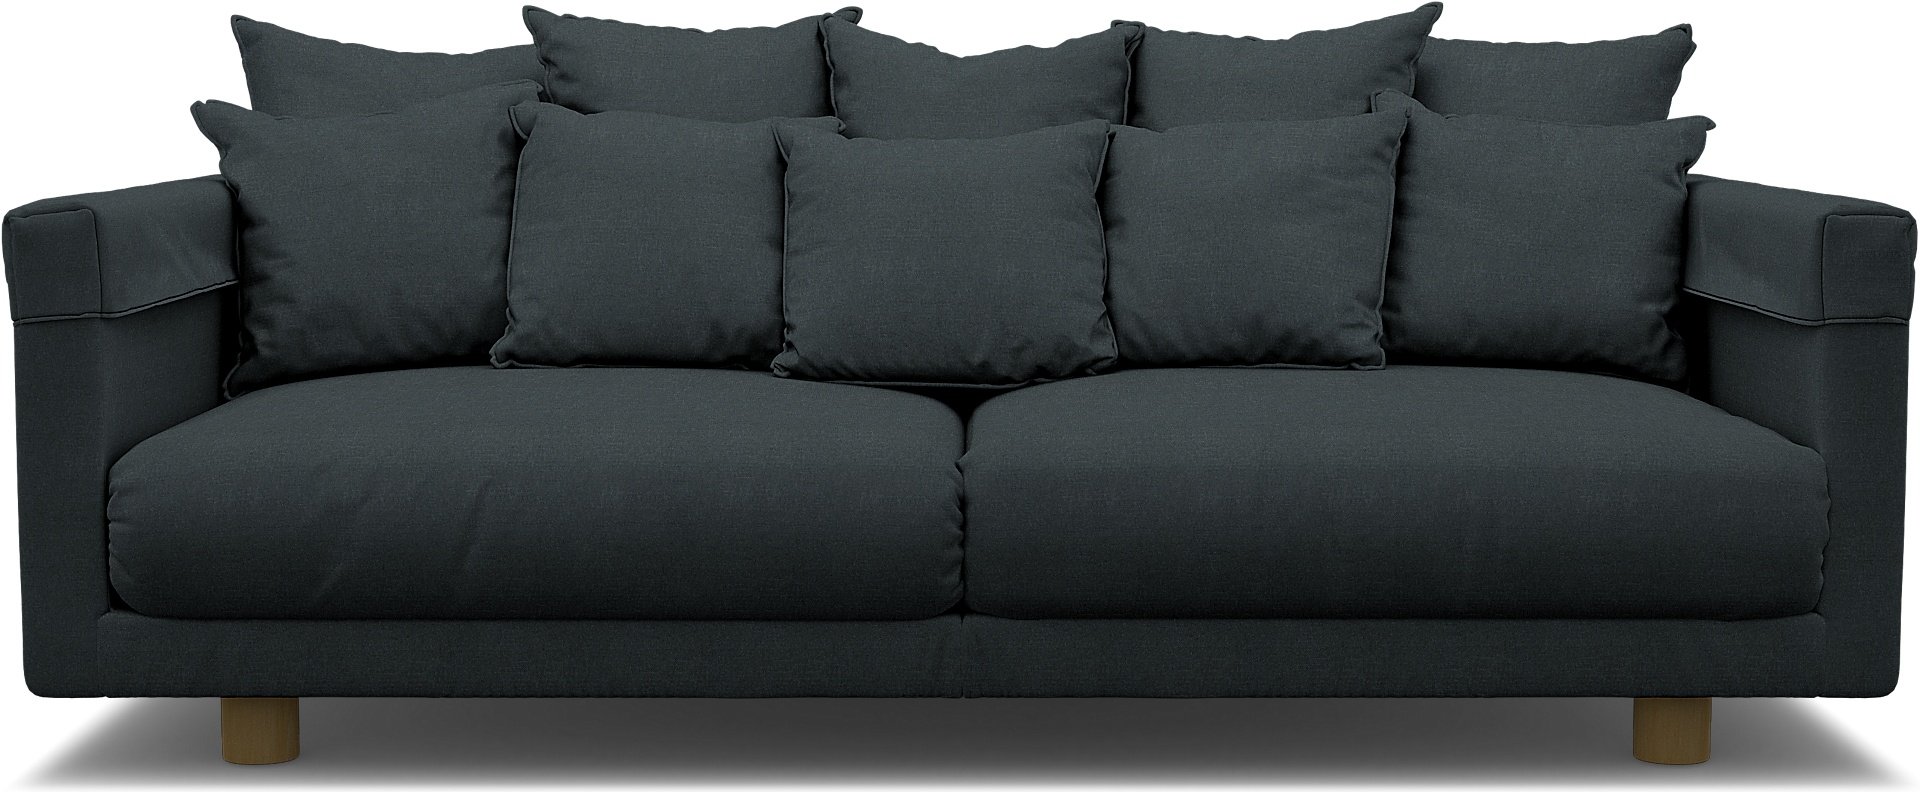 IKEA - Stockholm 2017 3 Seater Sofa Cover, Graphite Grey, Linen - Bemz